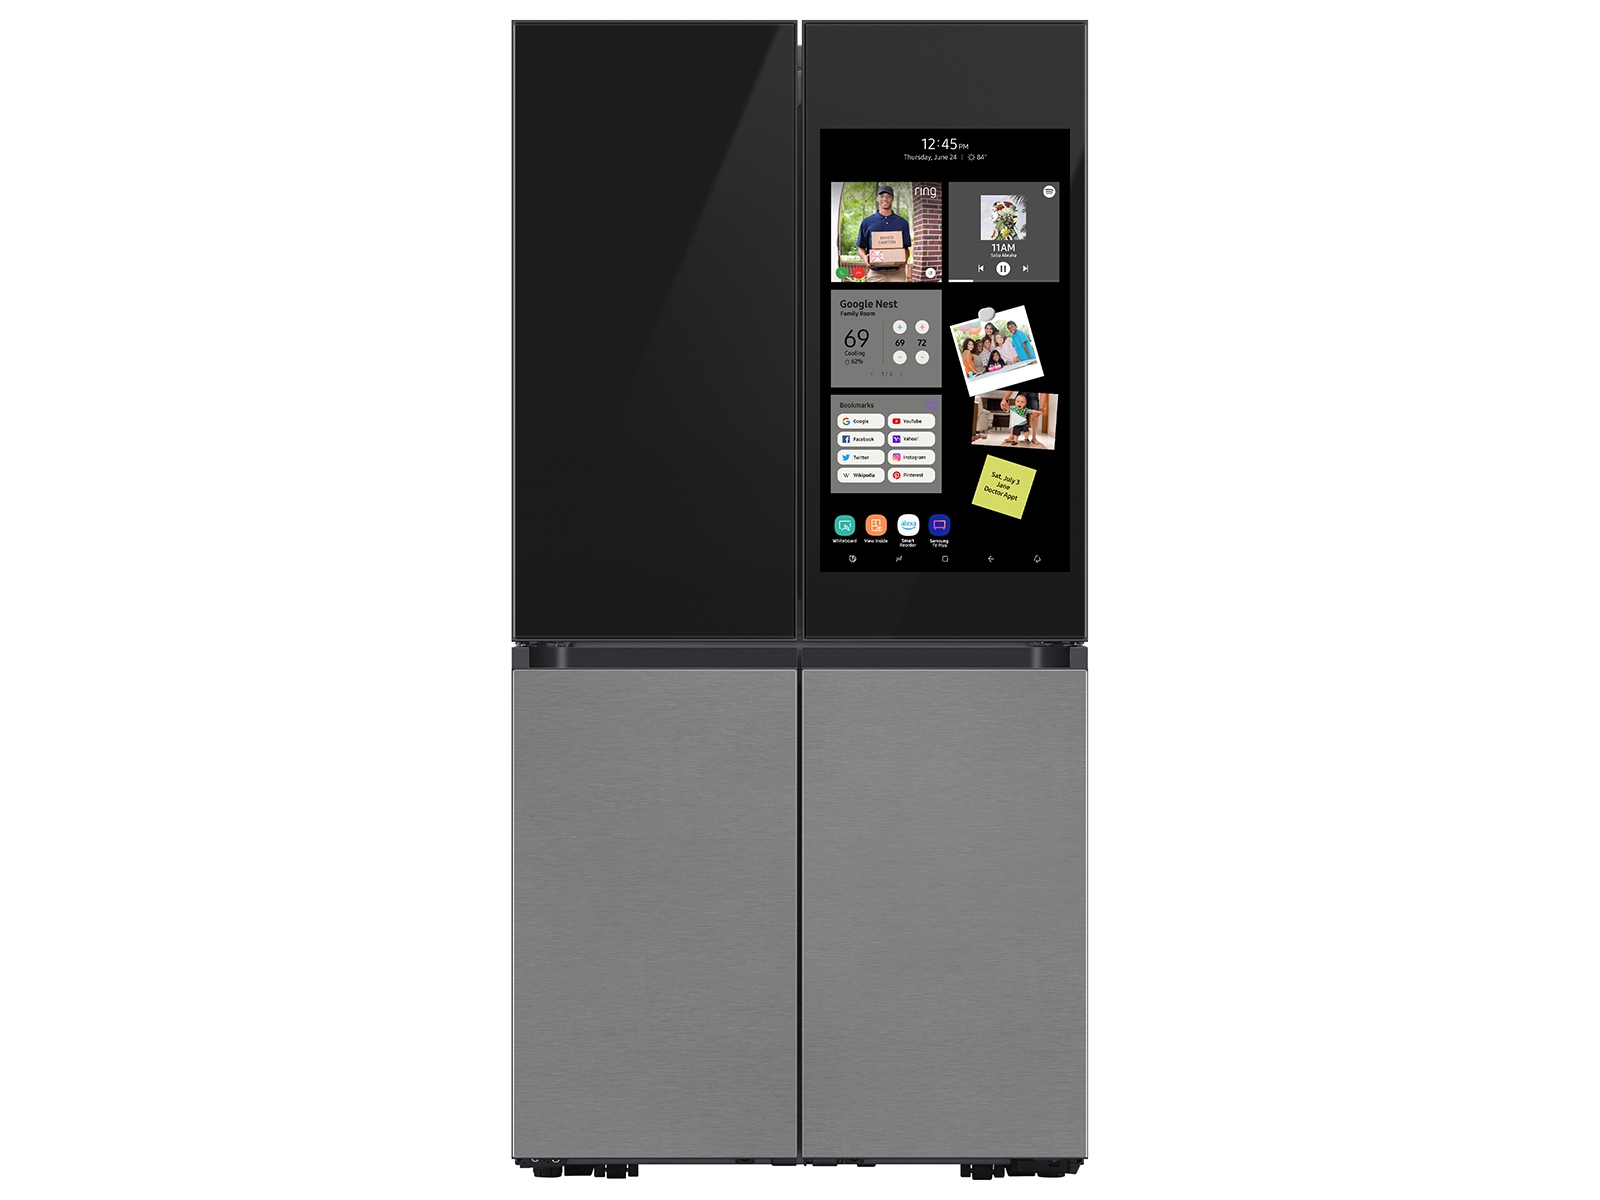 File:LG refrigerator.jpg - Wikipedia